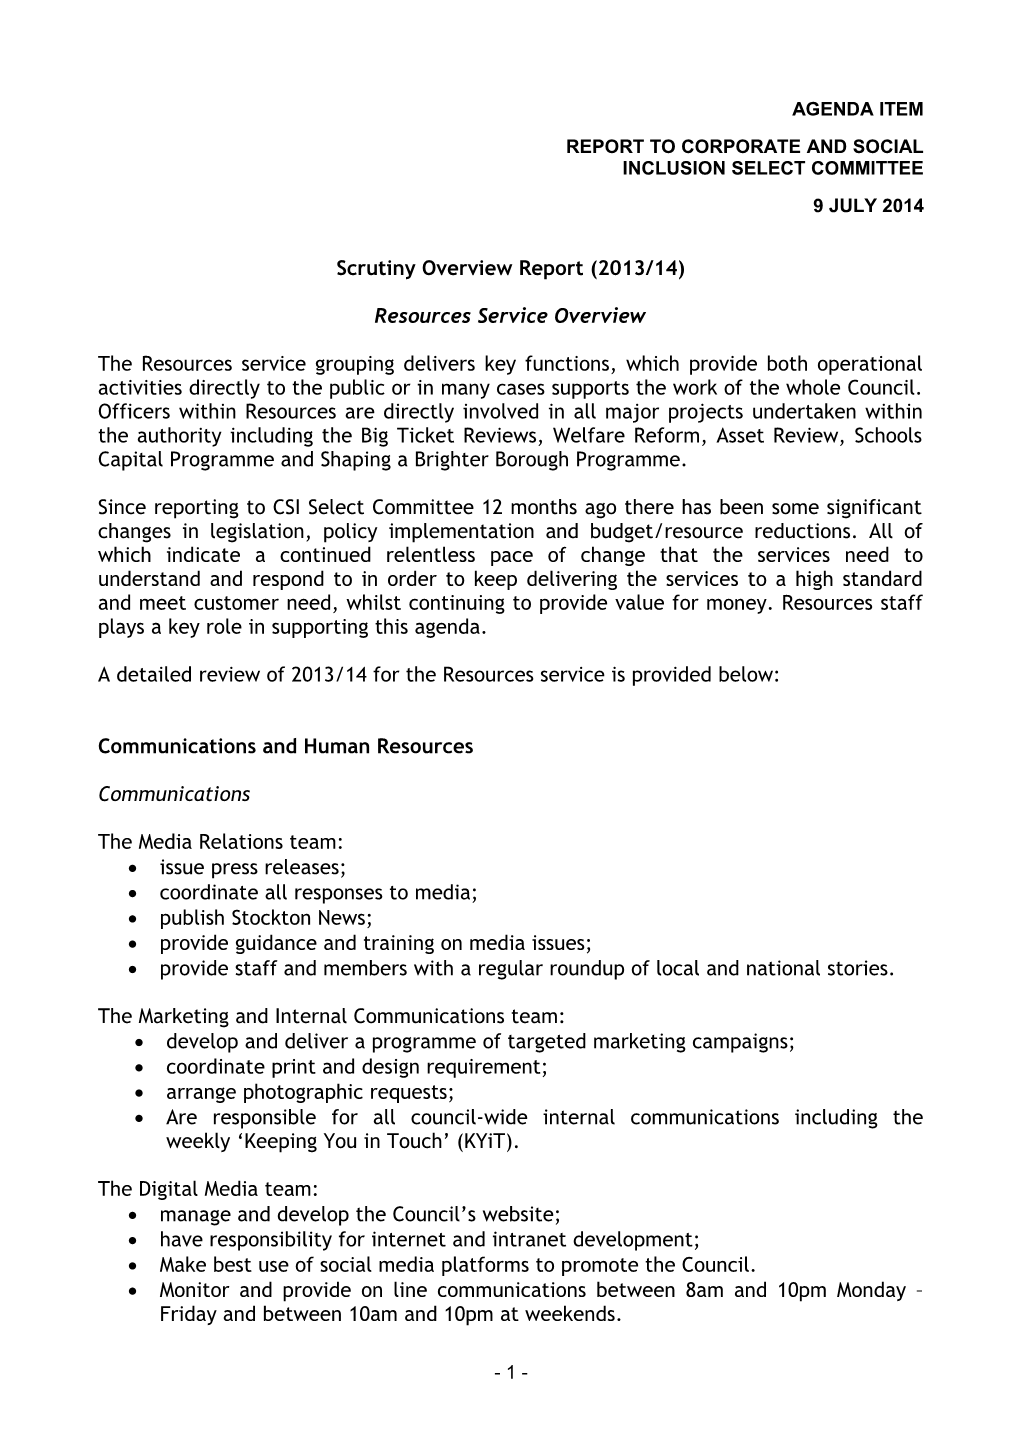 Scrutiny Overview Report (2009/10 YTD)